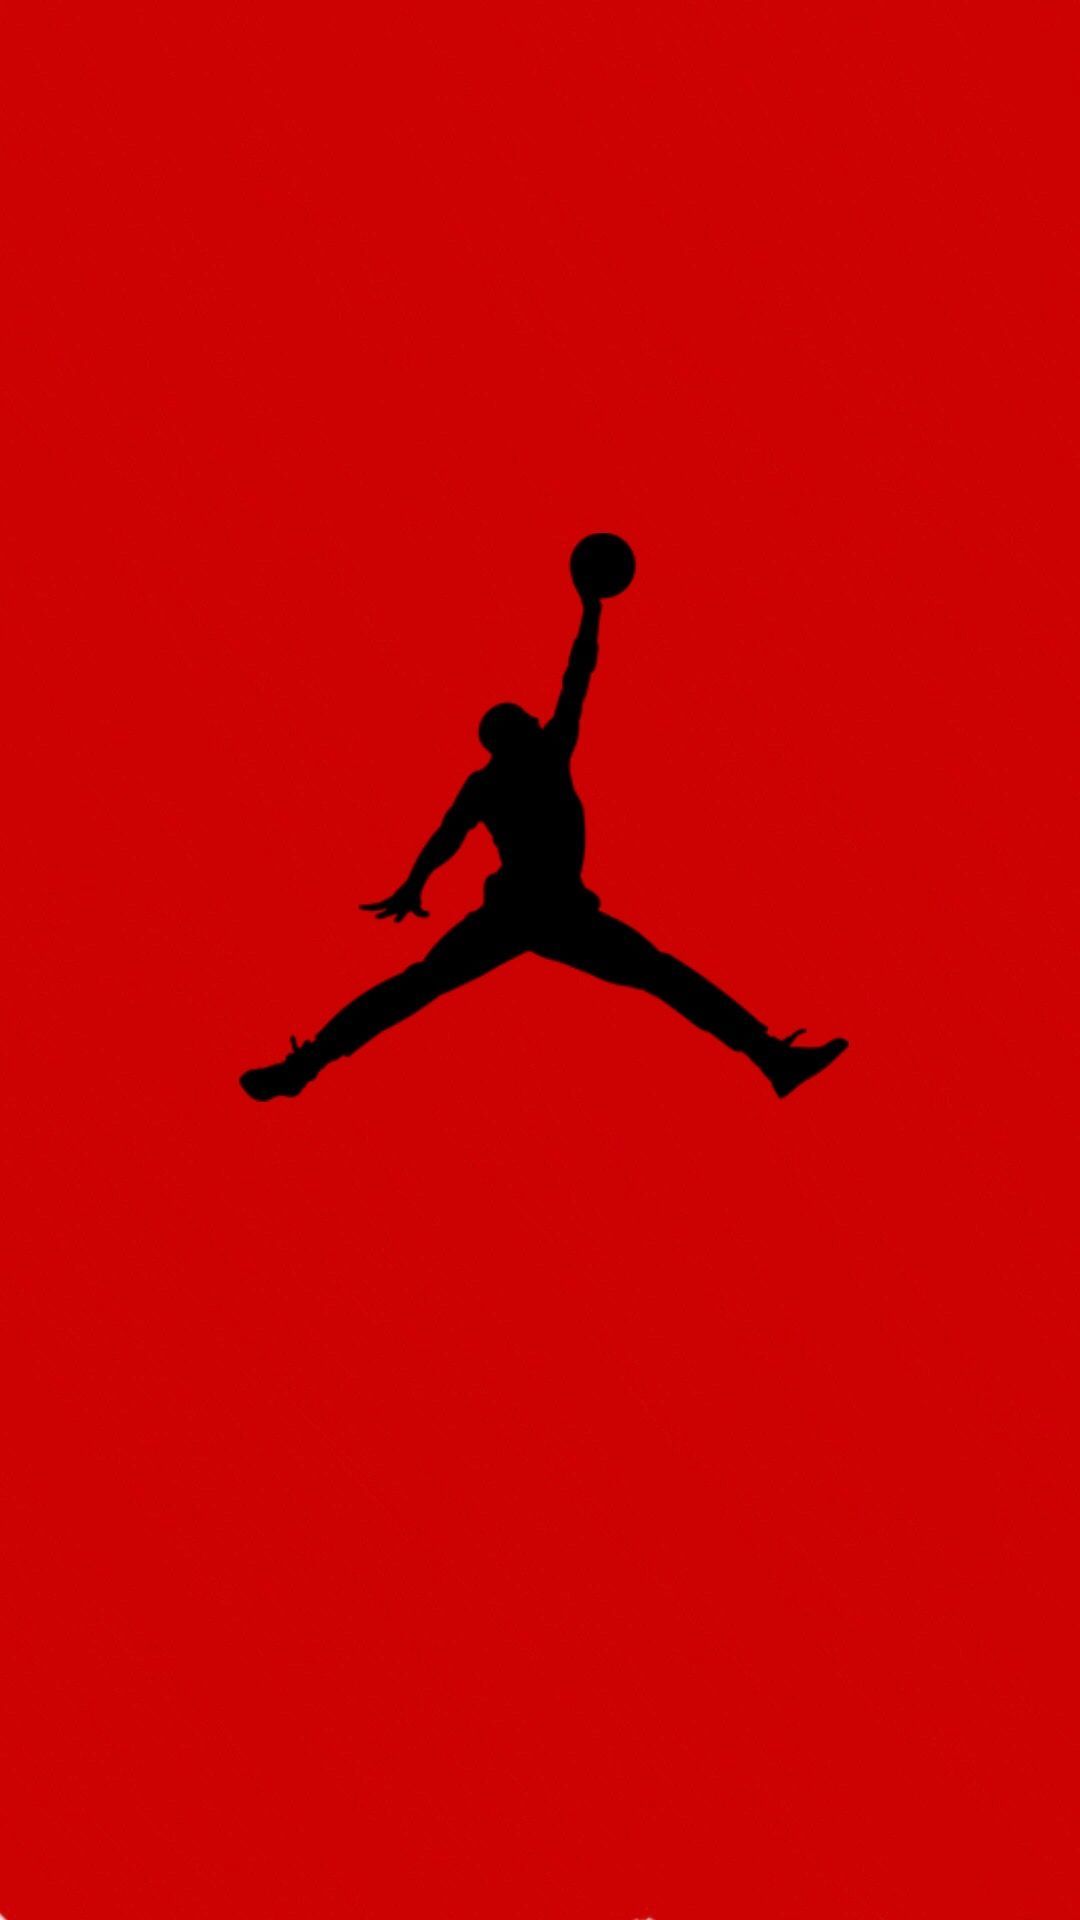 Jordan Nike Wallpaper Redwalpaperlist.com